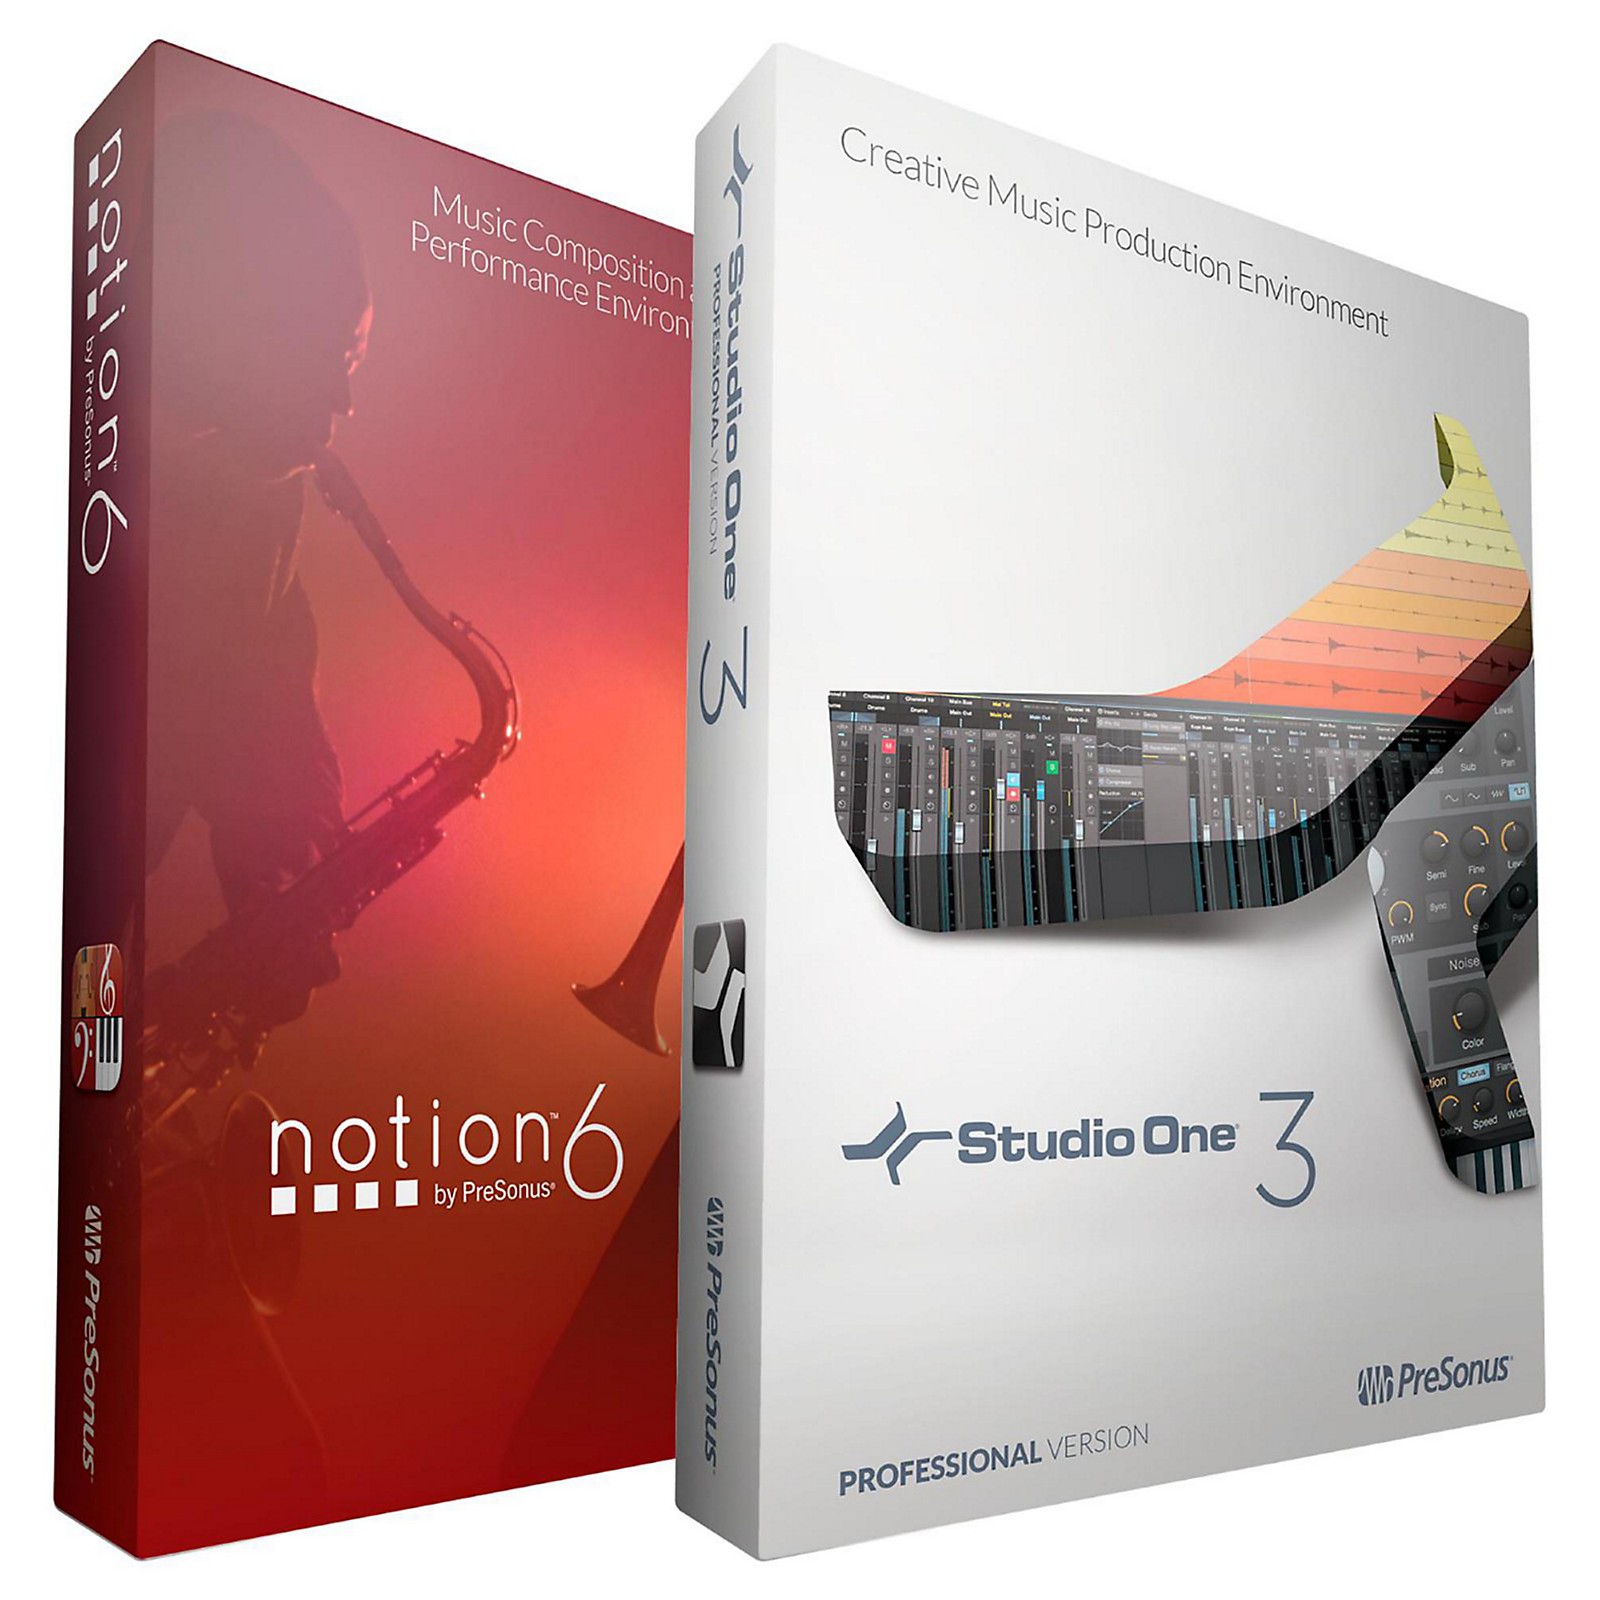 PreSonus Studio One 6 Professional 6.2.0 download the last version for windows